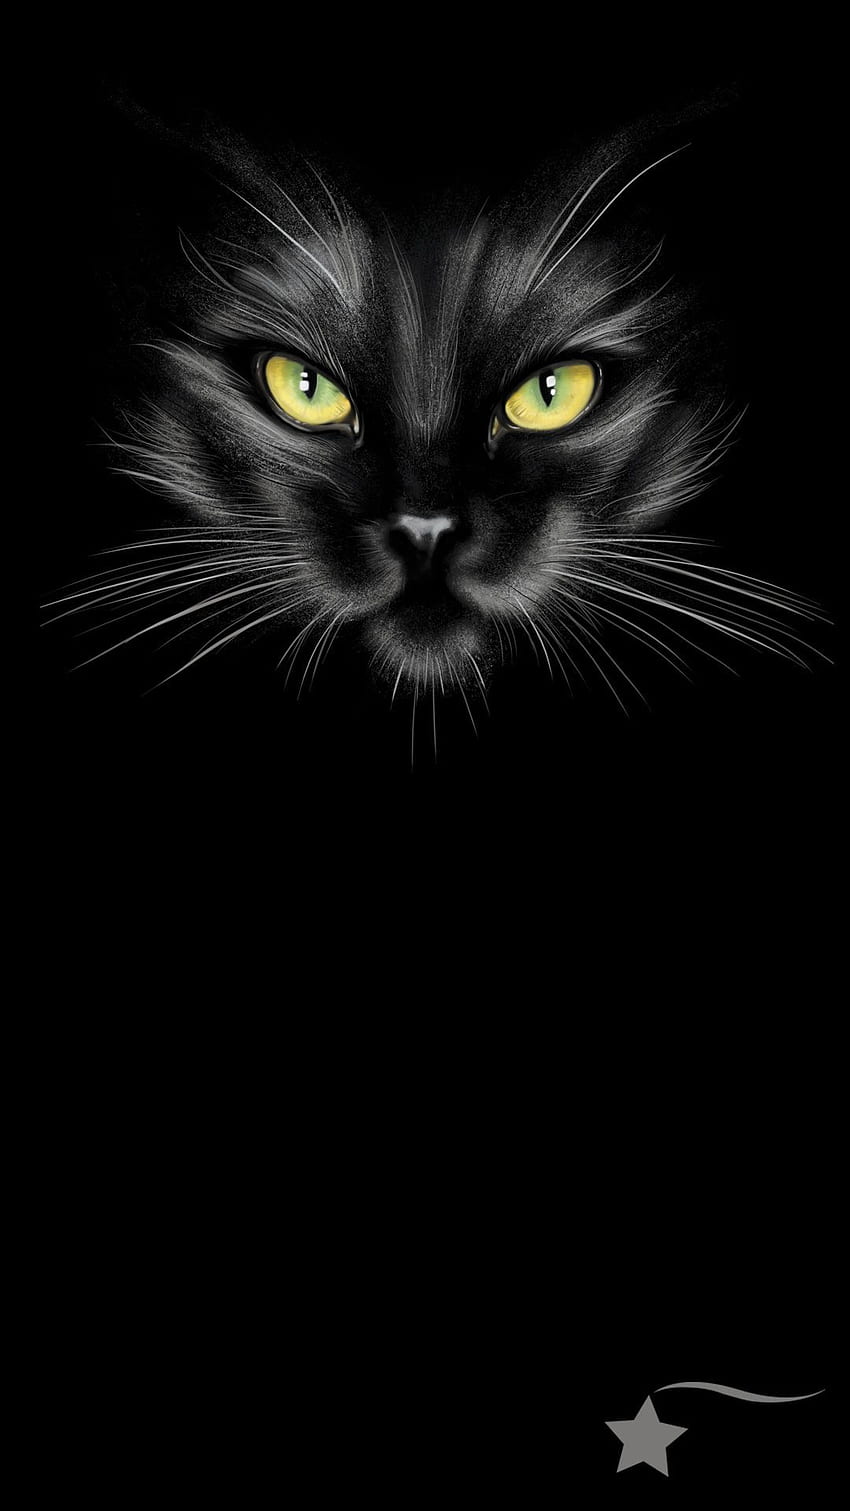 Black Cat Wallpaper  Black Cat Wallpaper Iphone  1080x1920 Wallpaper   teahubio